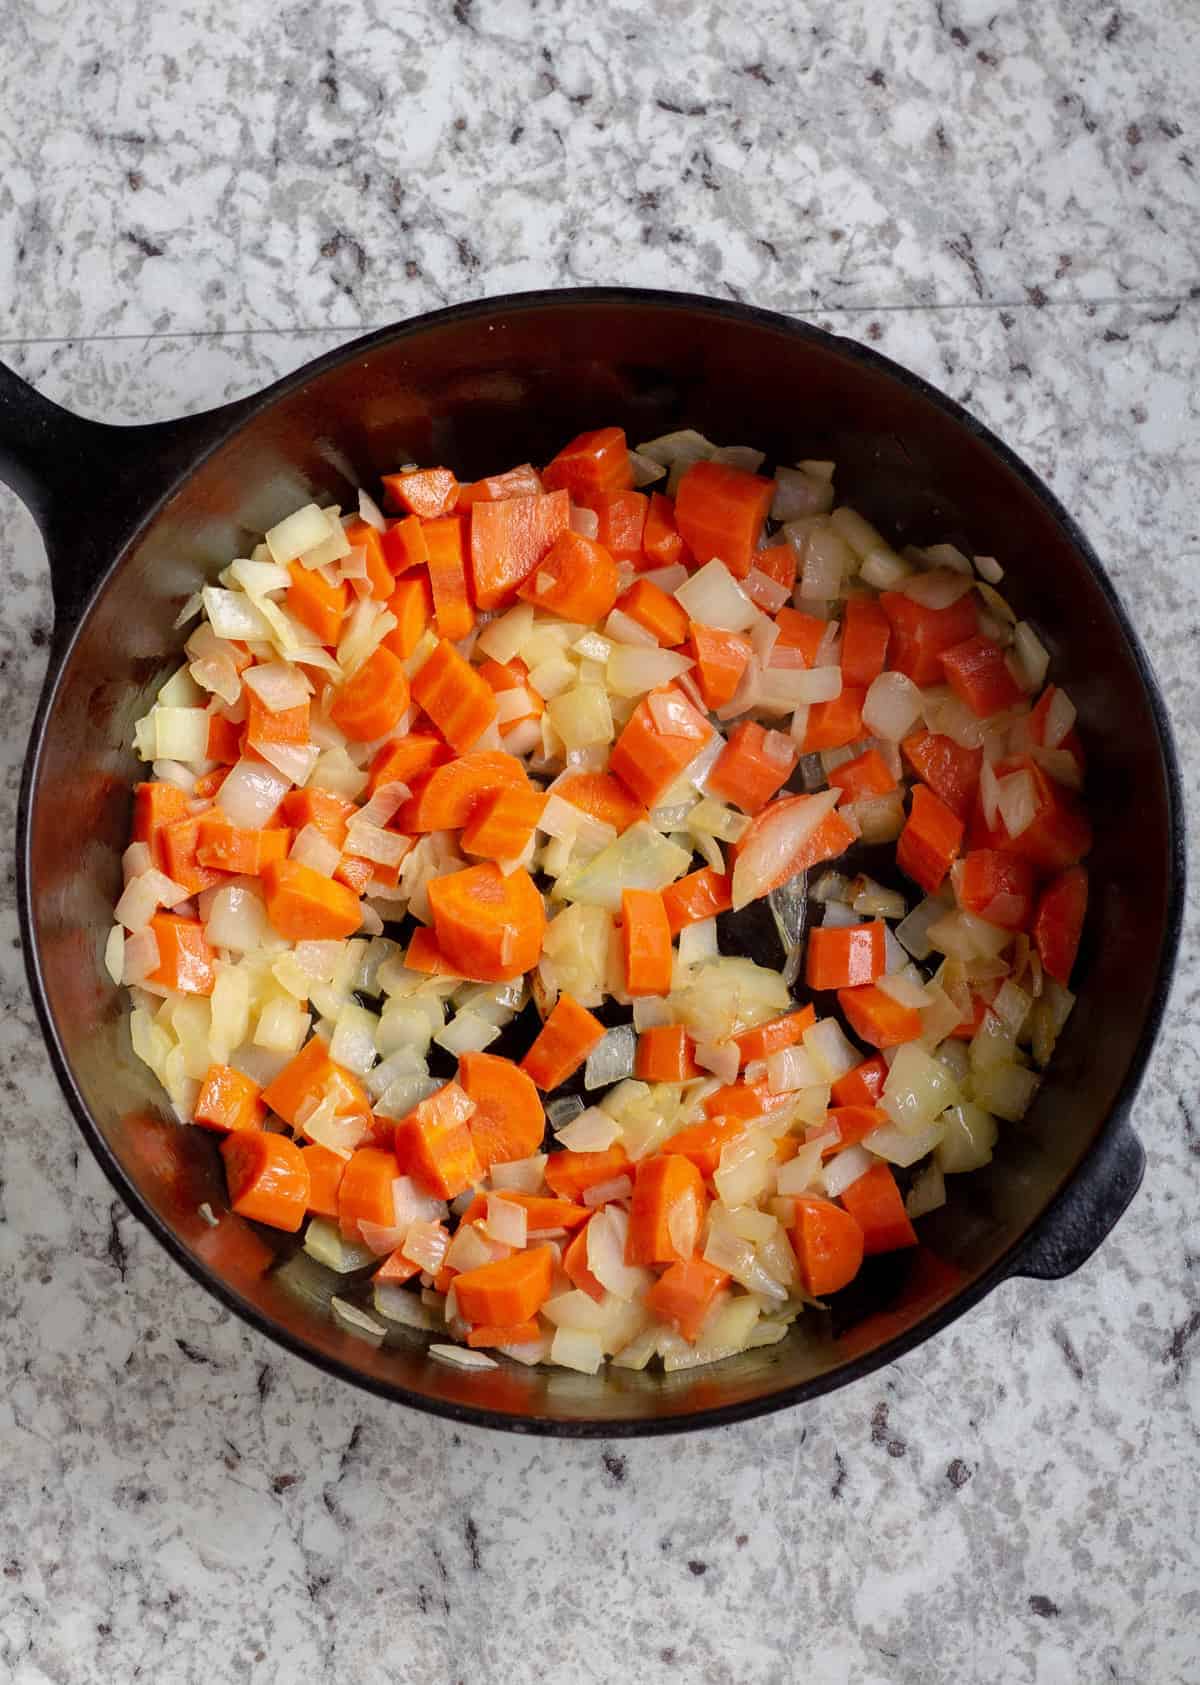 Sauteed veggies in cast iron skillet